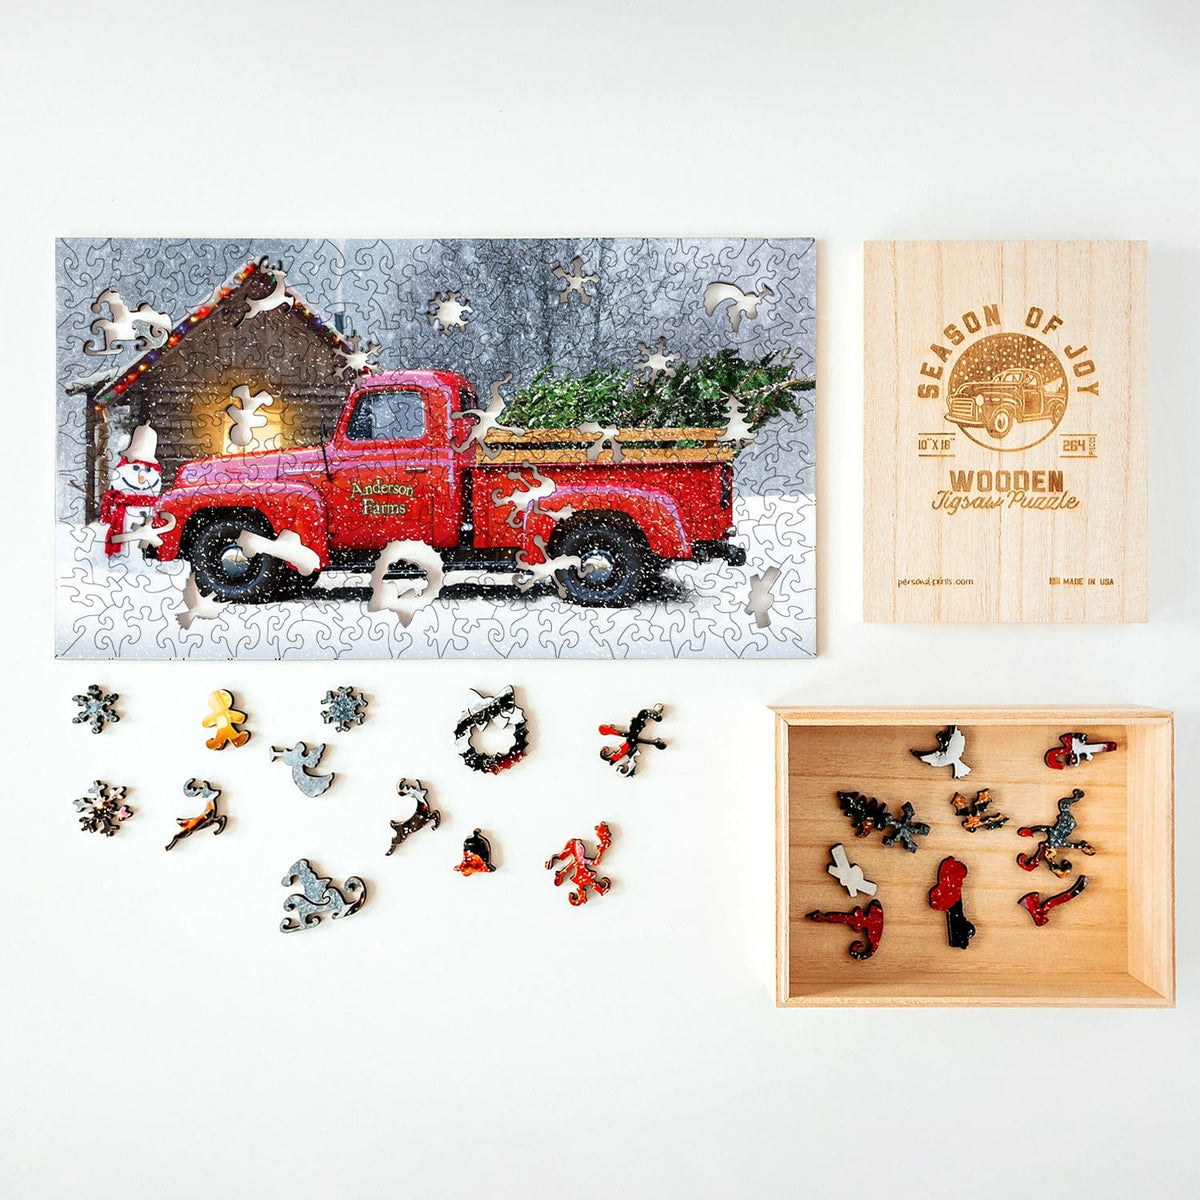 Custom Wood jigsaw puzzle in a classy gift presentation